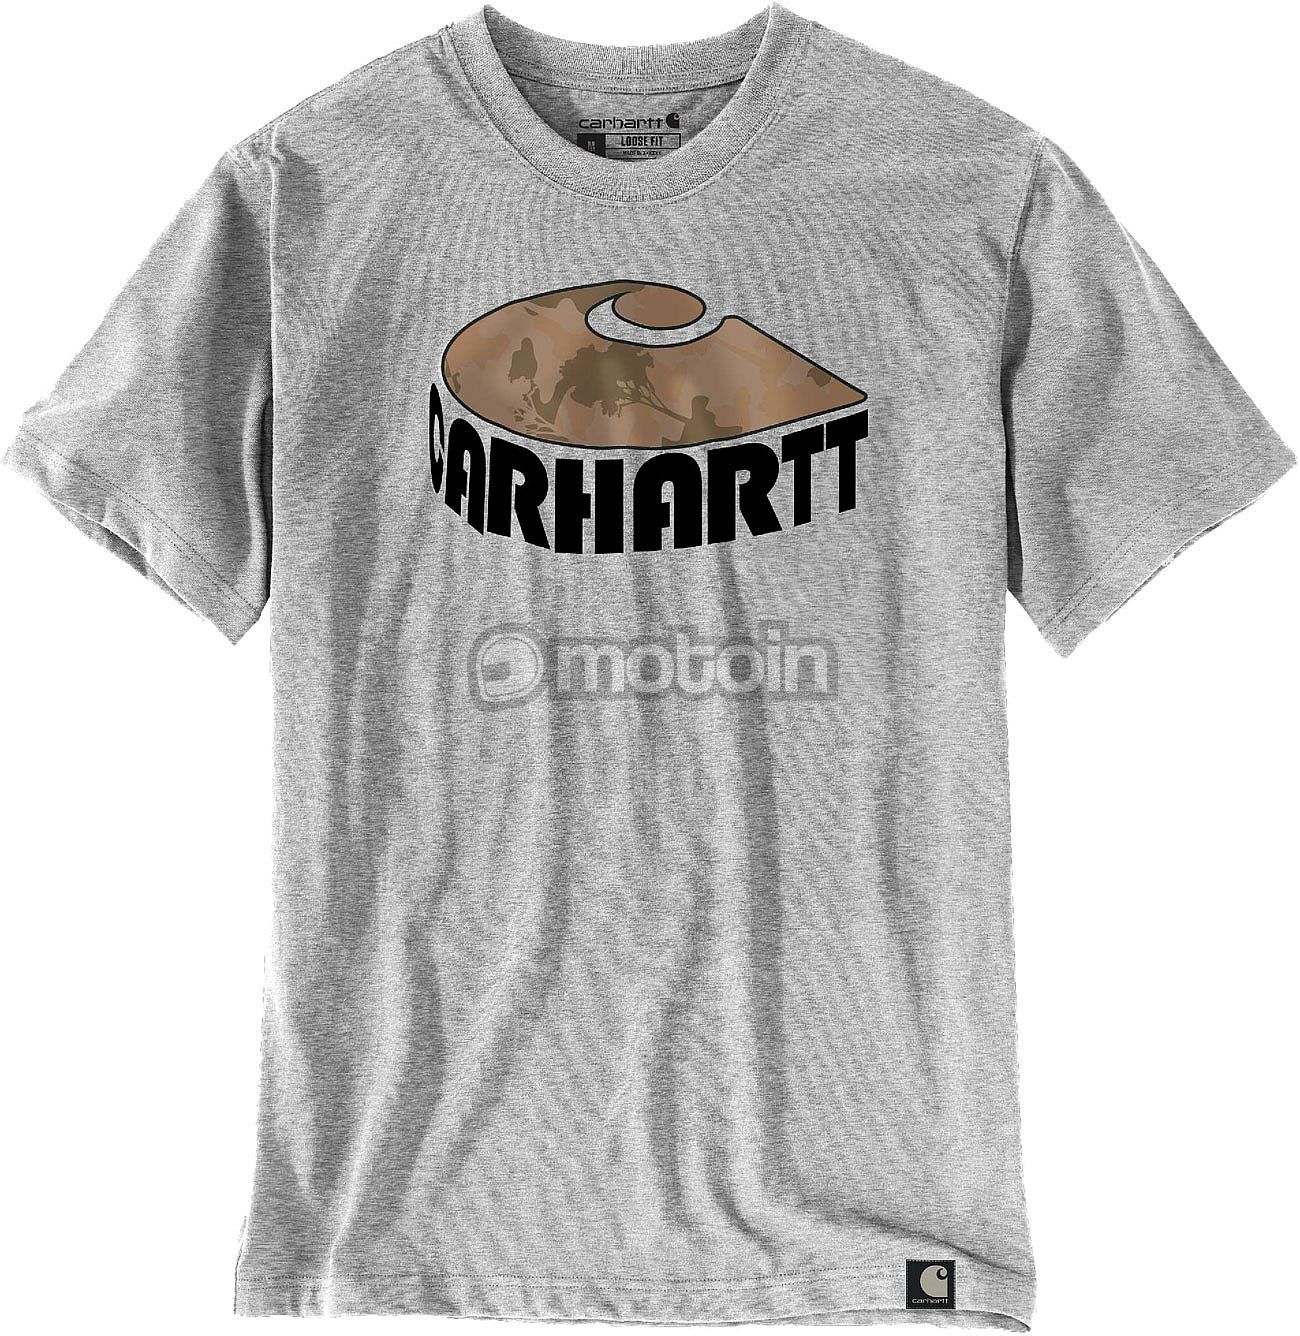 Carhartt Camo C Graphic, koszulka